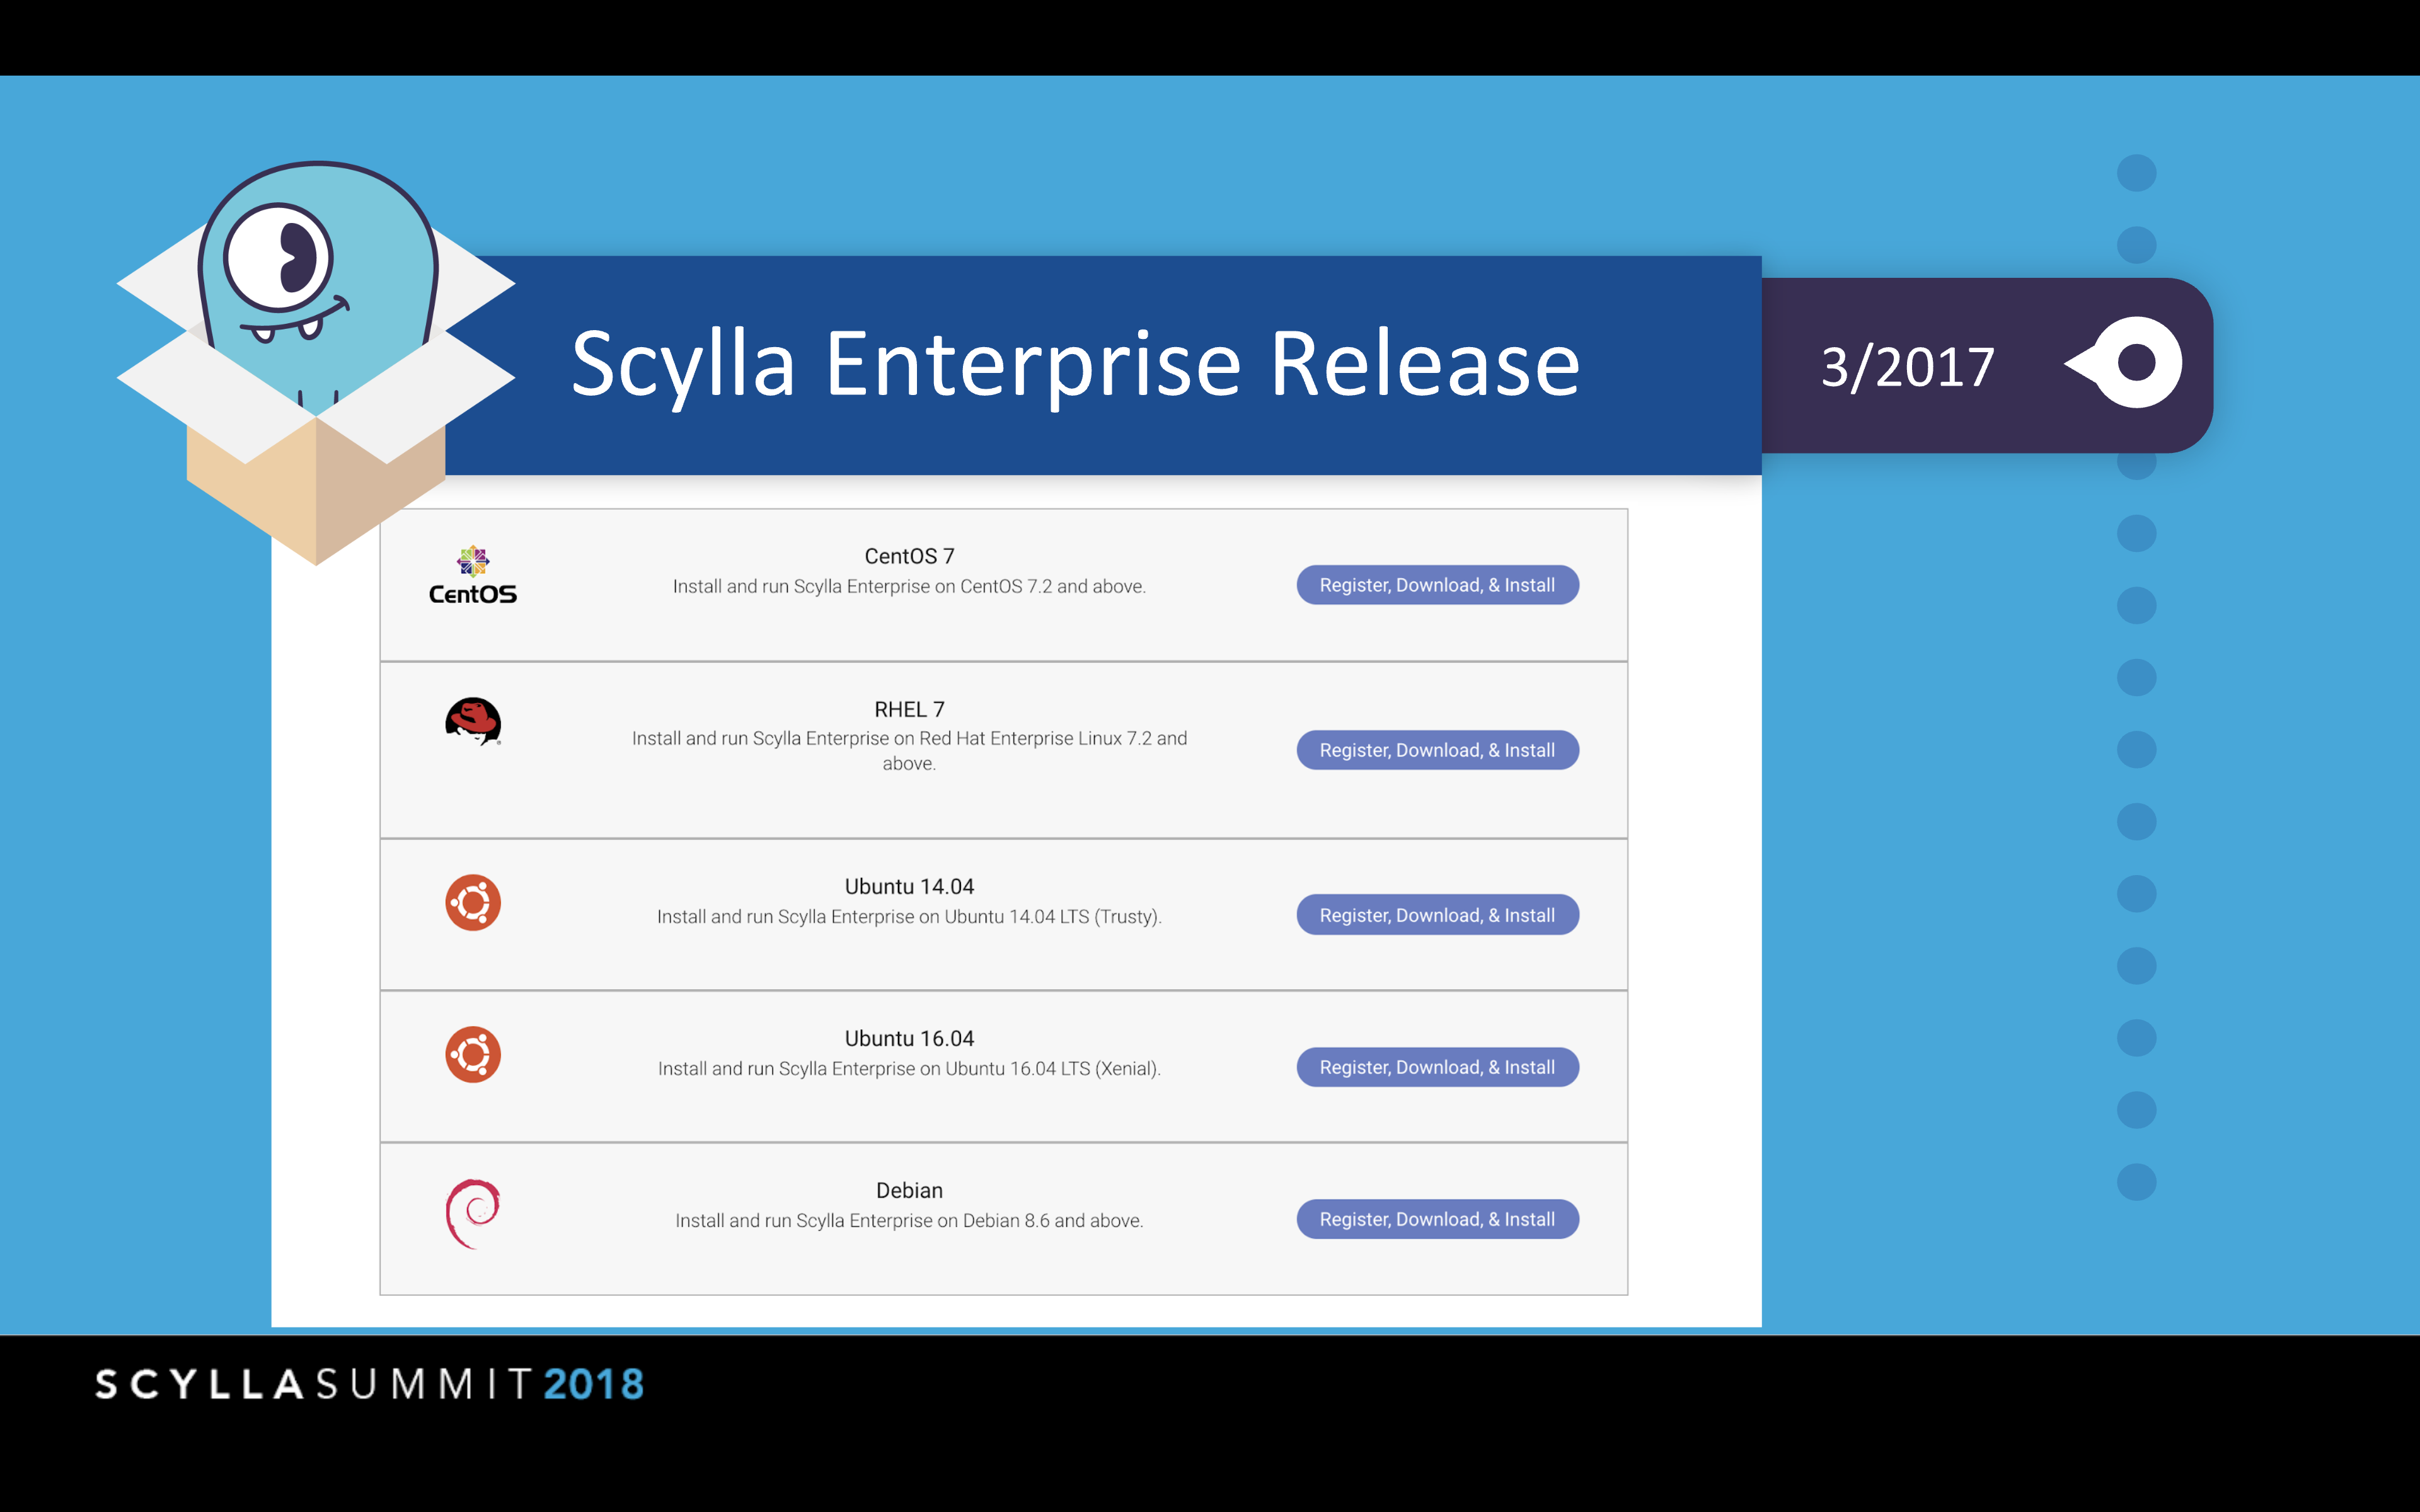 ScyllaDB Enterprise Release Graphic